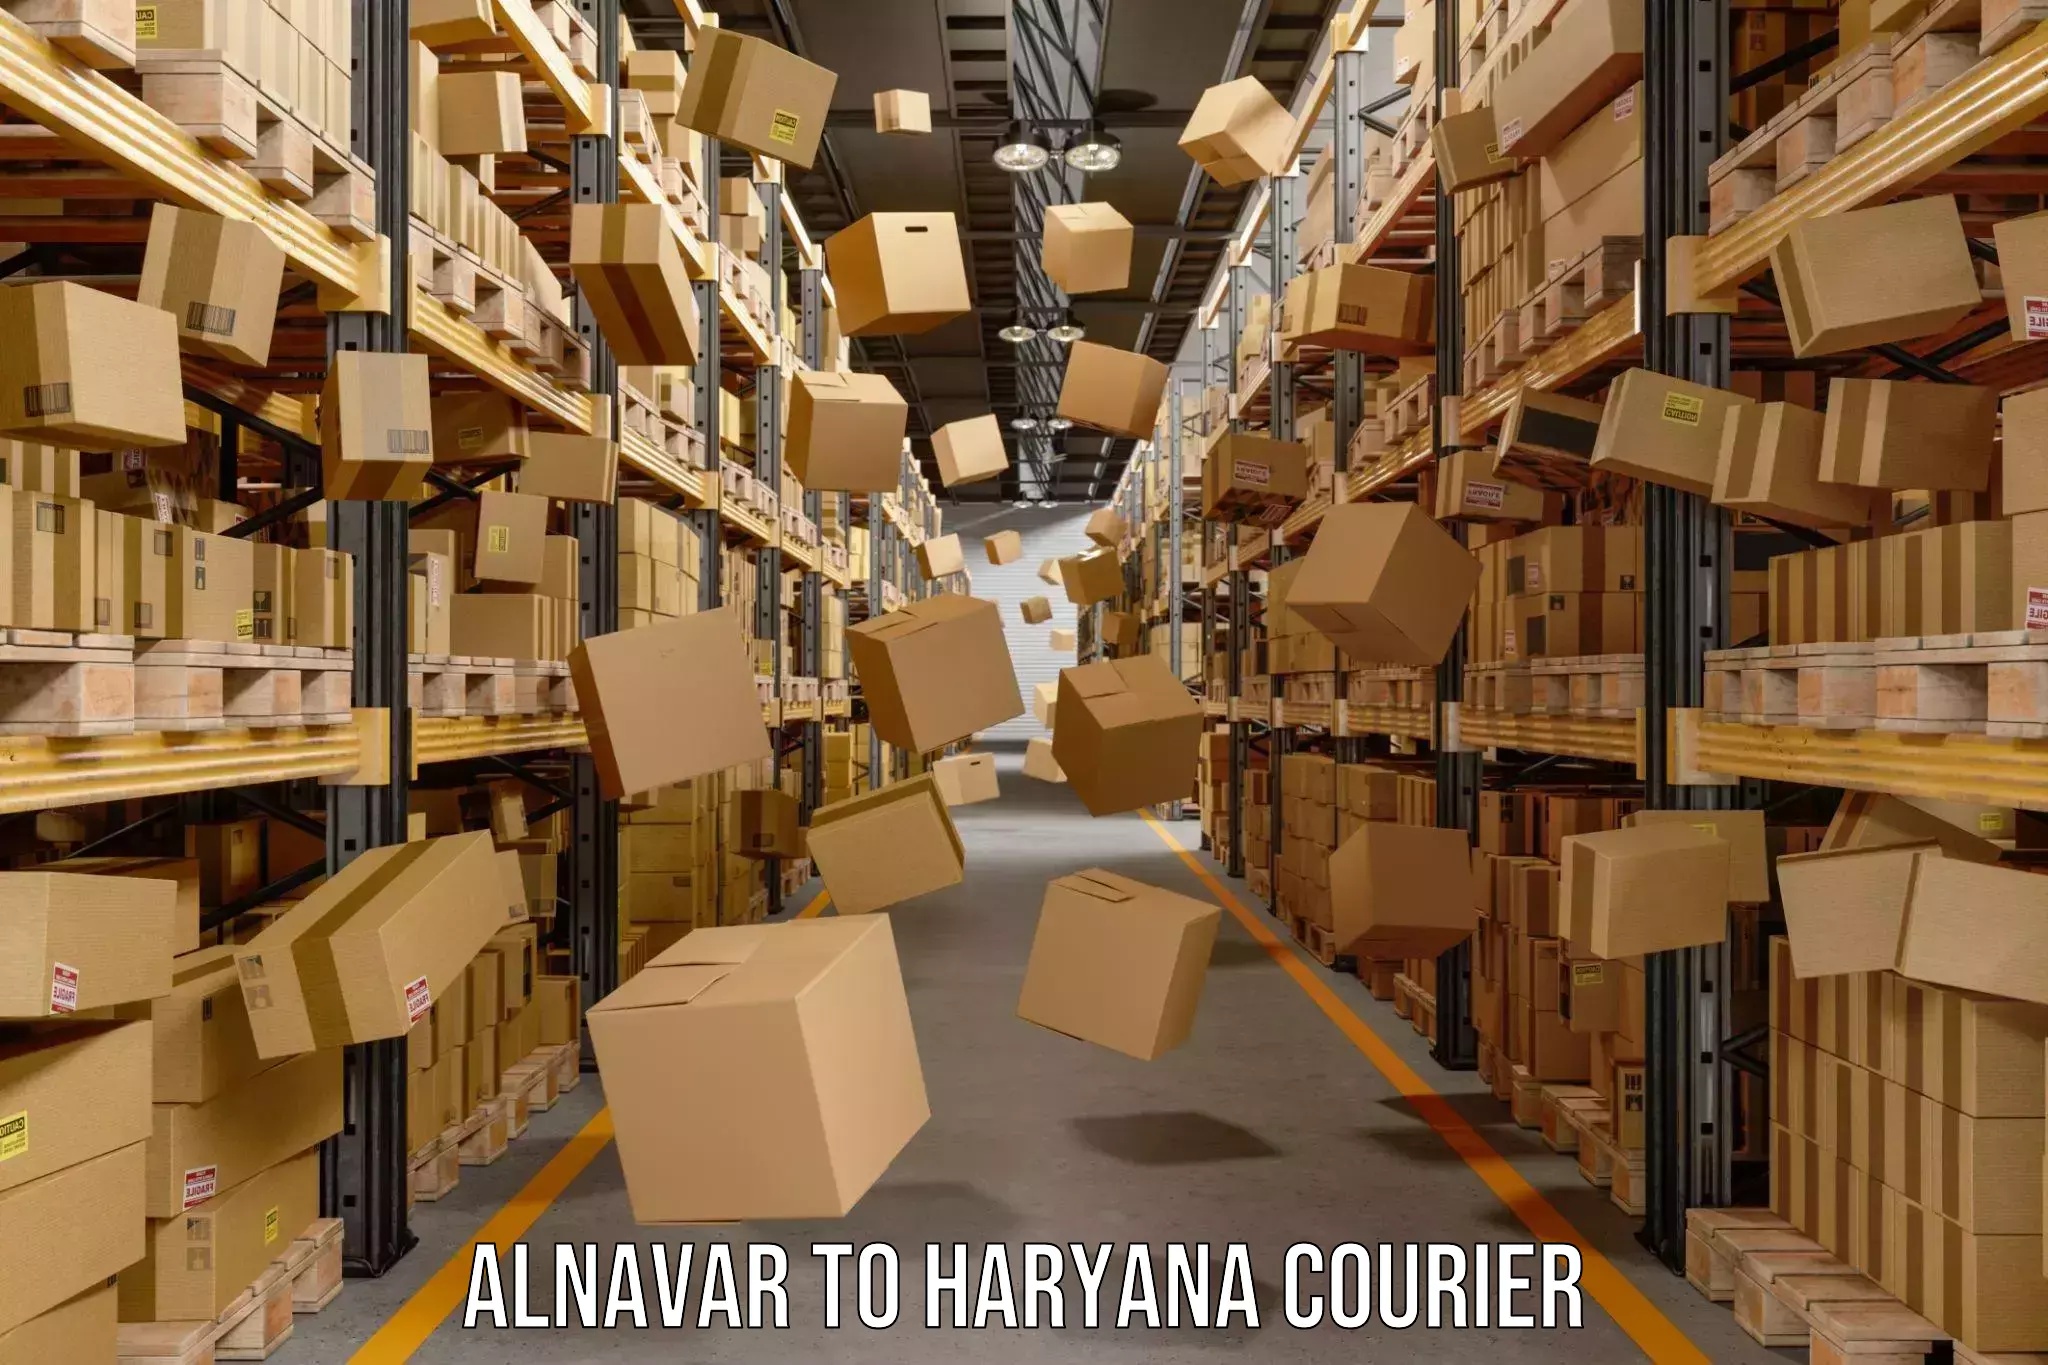 Courier service comparison Alnavar to Charkhi Dadri